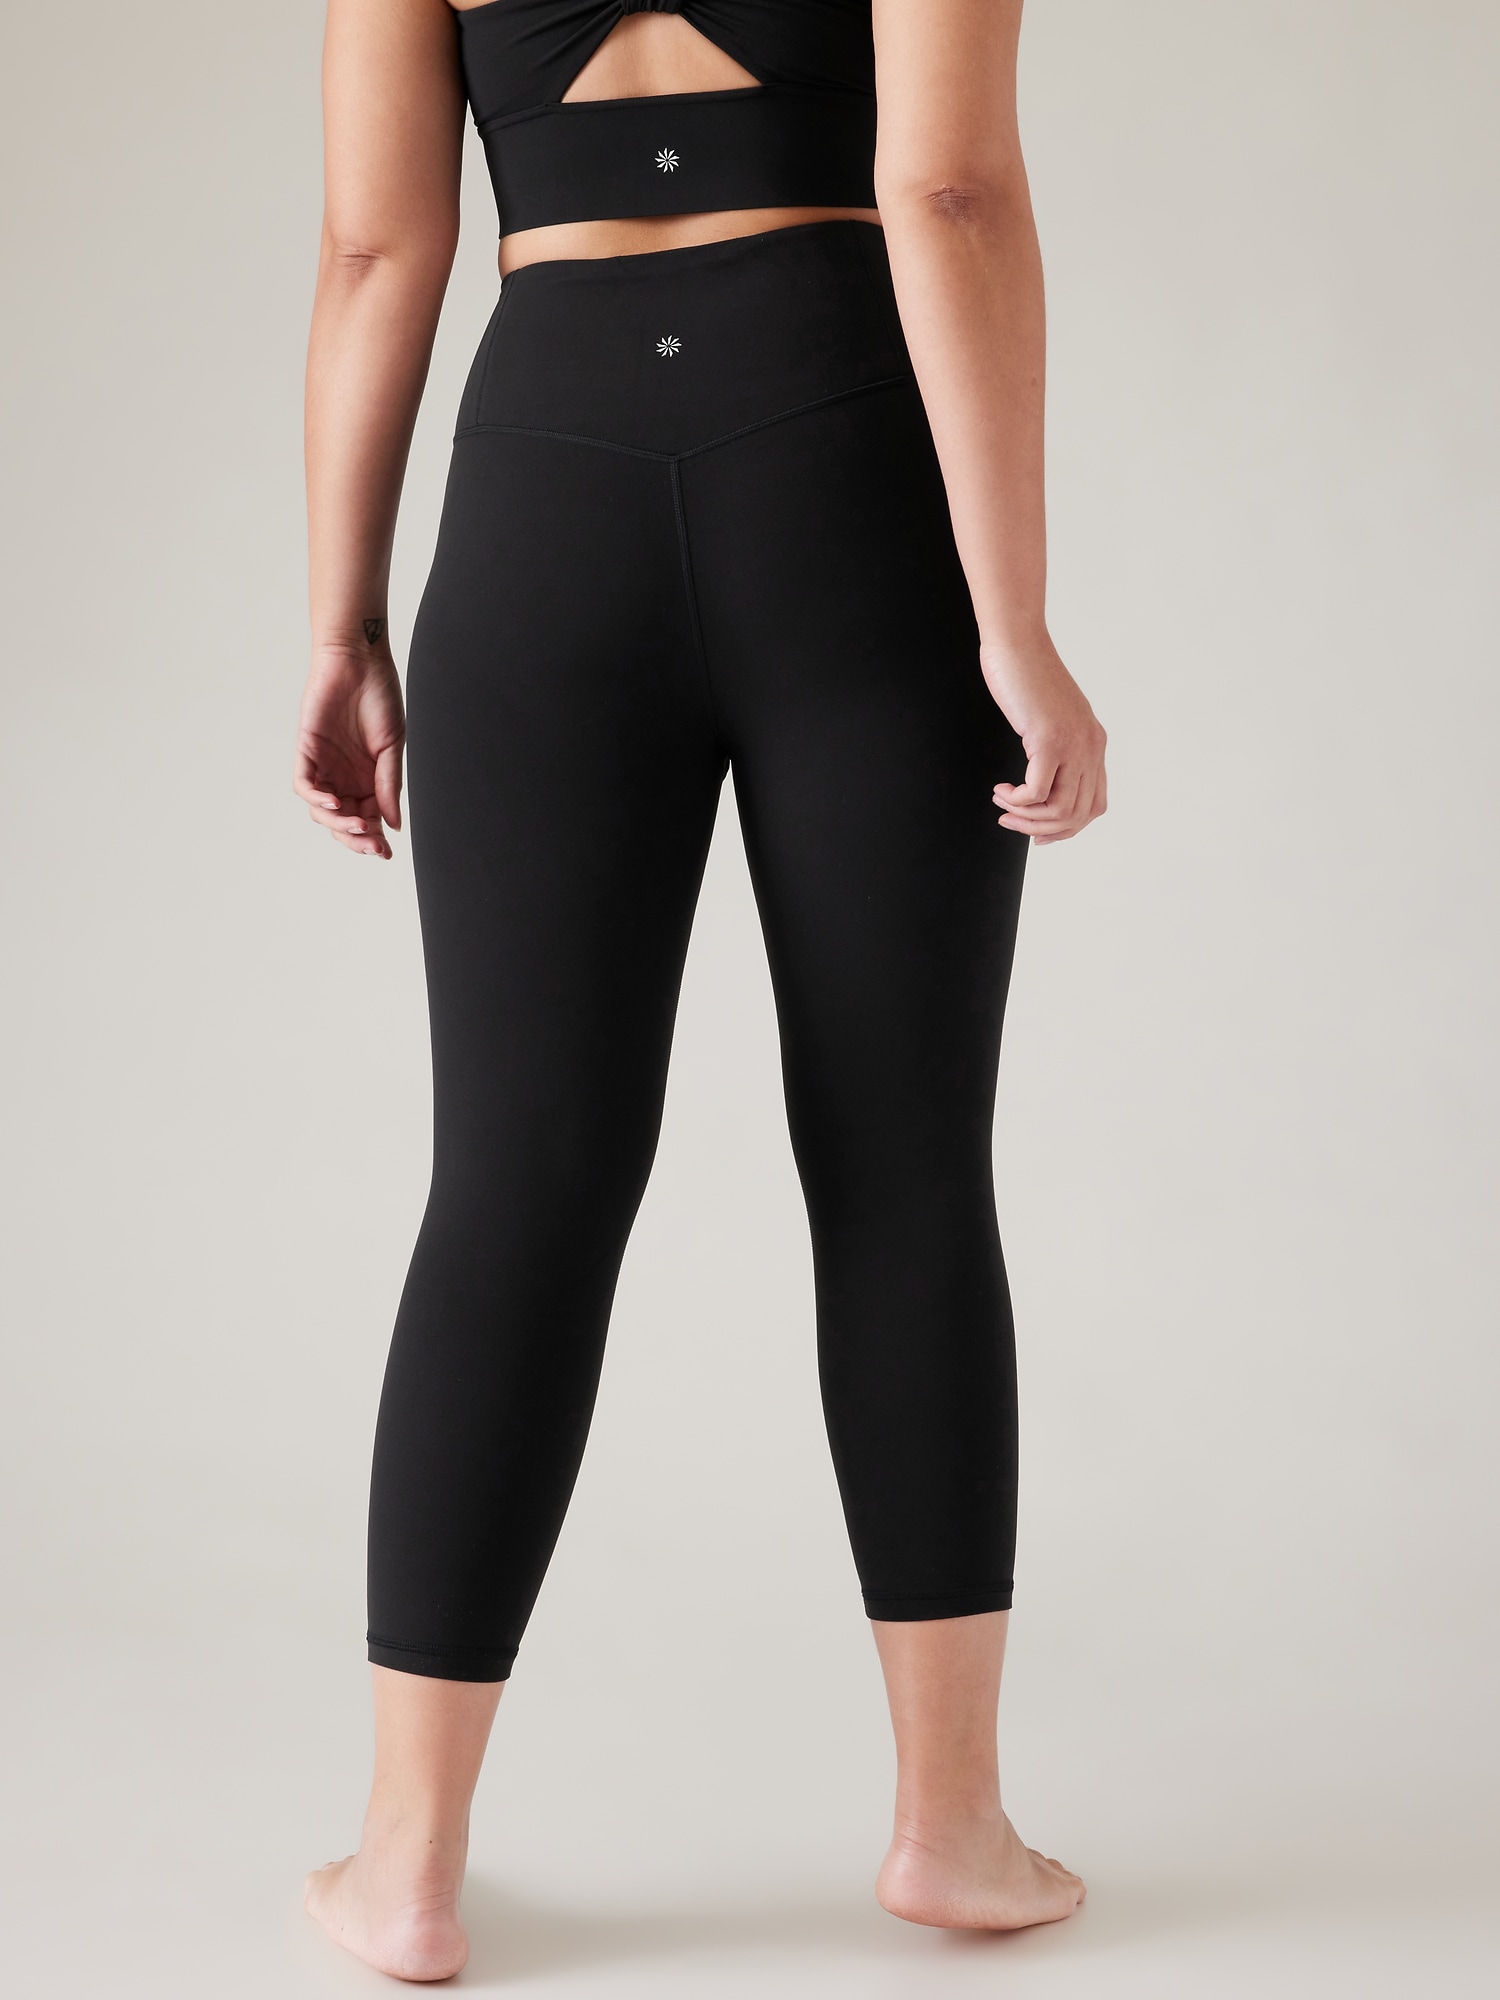 Lululemon Grey Two Toned Mid Rise Cropped Workout Straight Leg Capri Pants  - Size 6